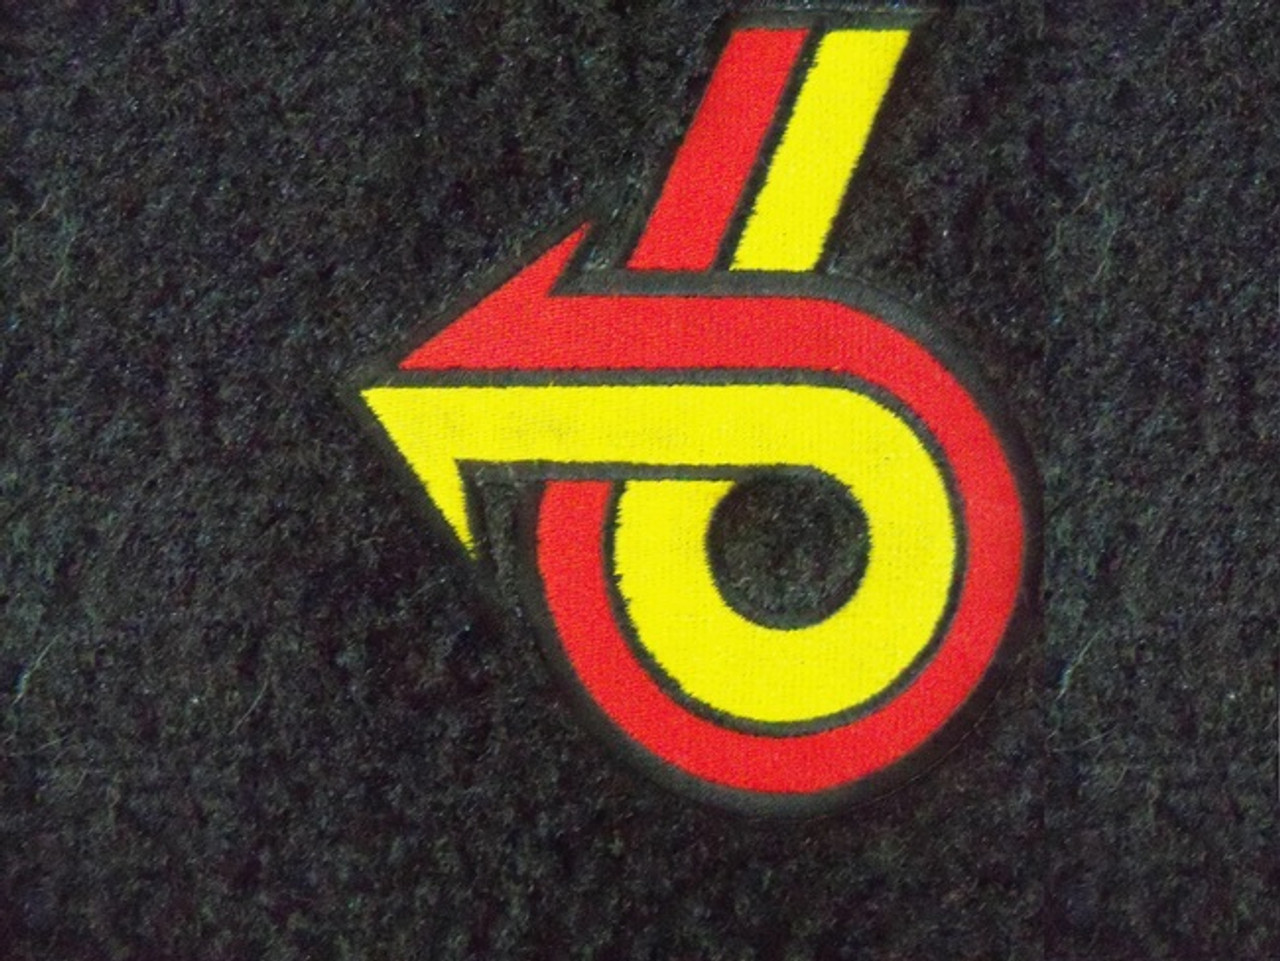 Floor Mats (set of 4) w/Turbo 6 logo #62P  on 2 front mats  (1984-1987)